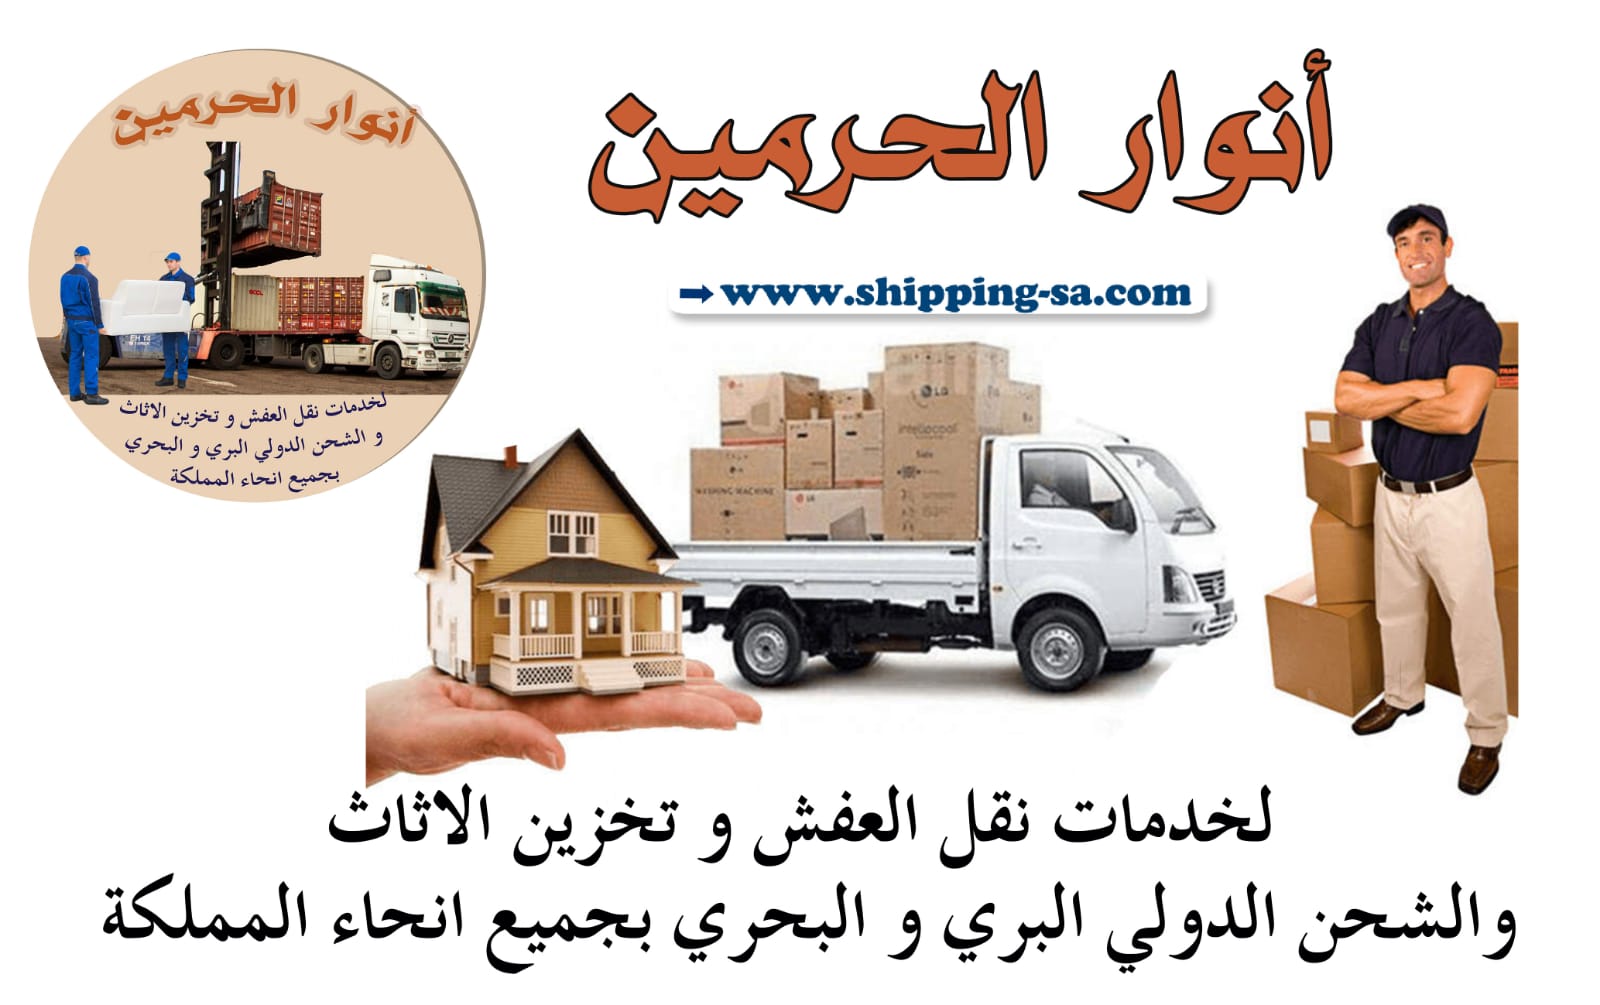 www.shipping-sa.com